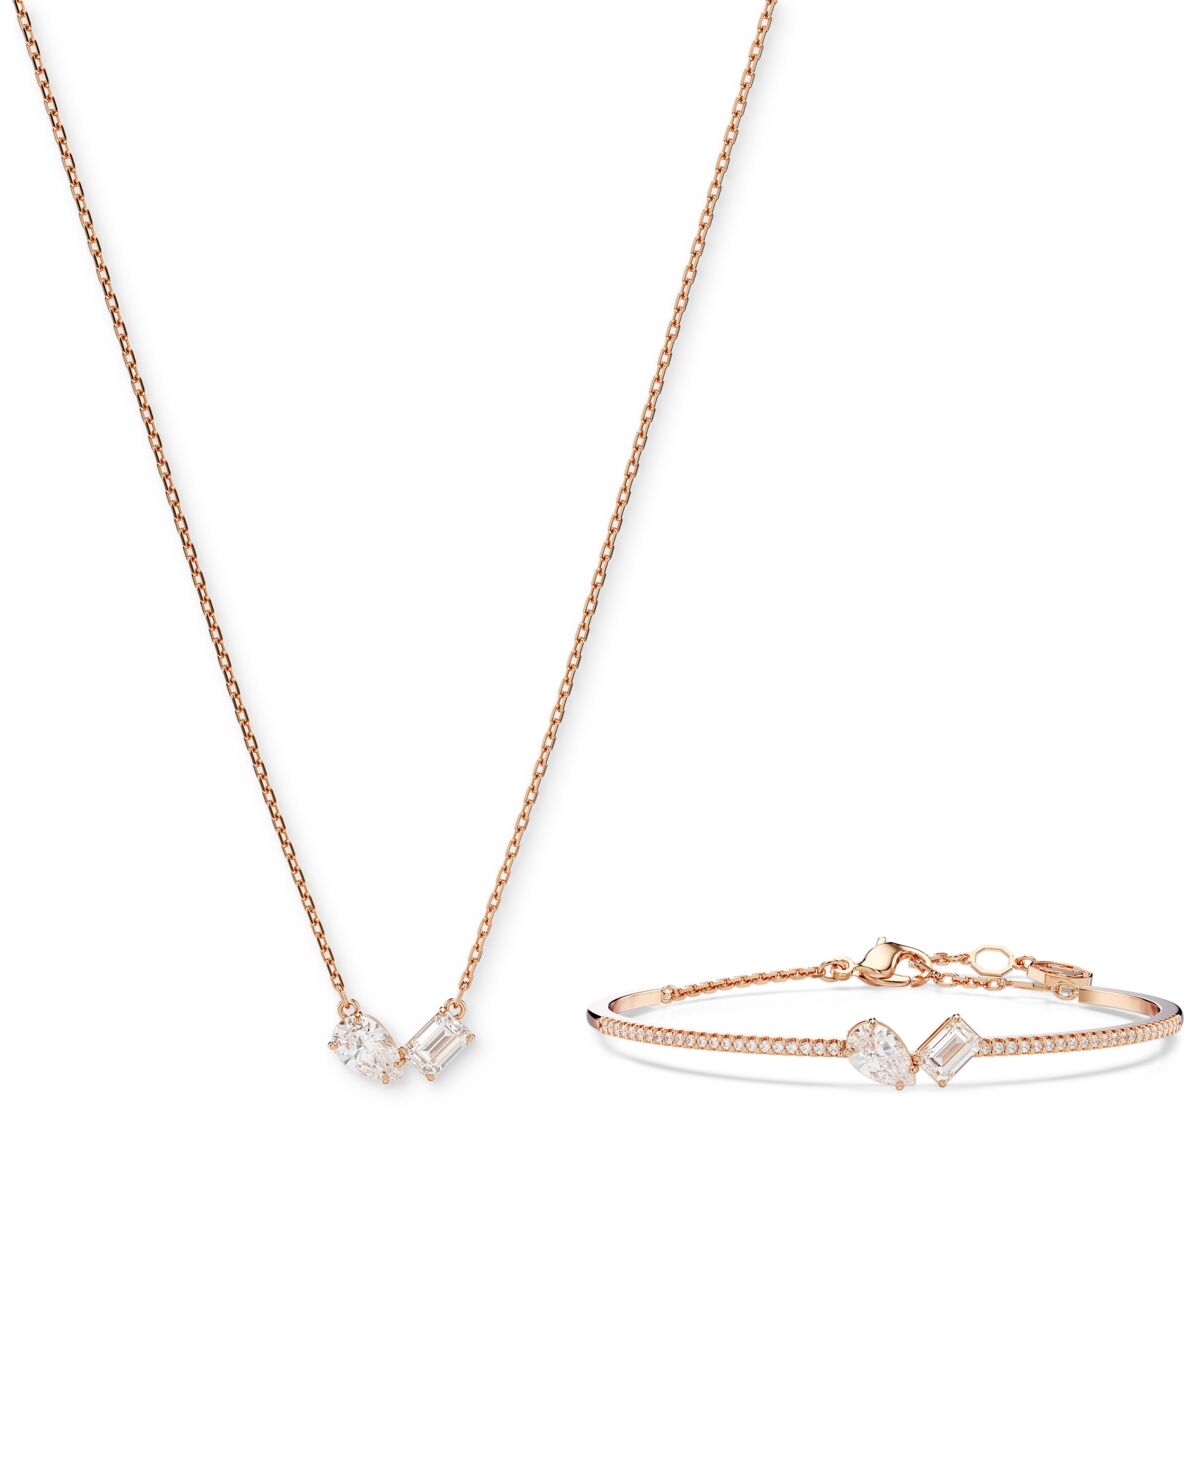 Swarovski Rose Gold-Tone Mesmera Mixed Cuts Bangle Bracelet & Pendant Necklace Set, 15